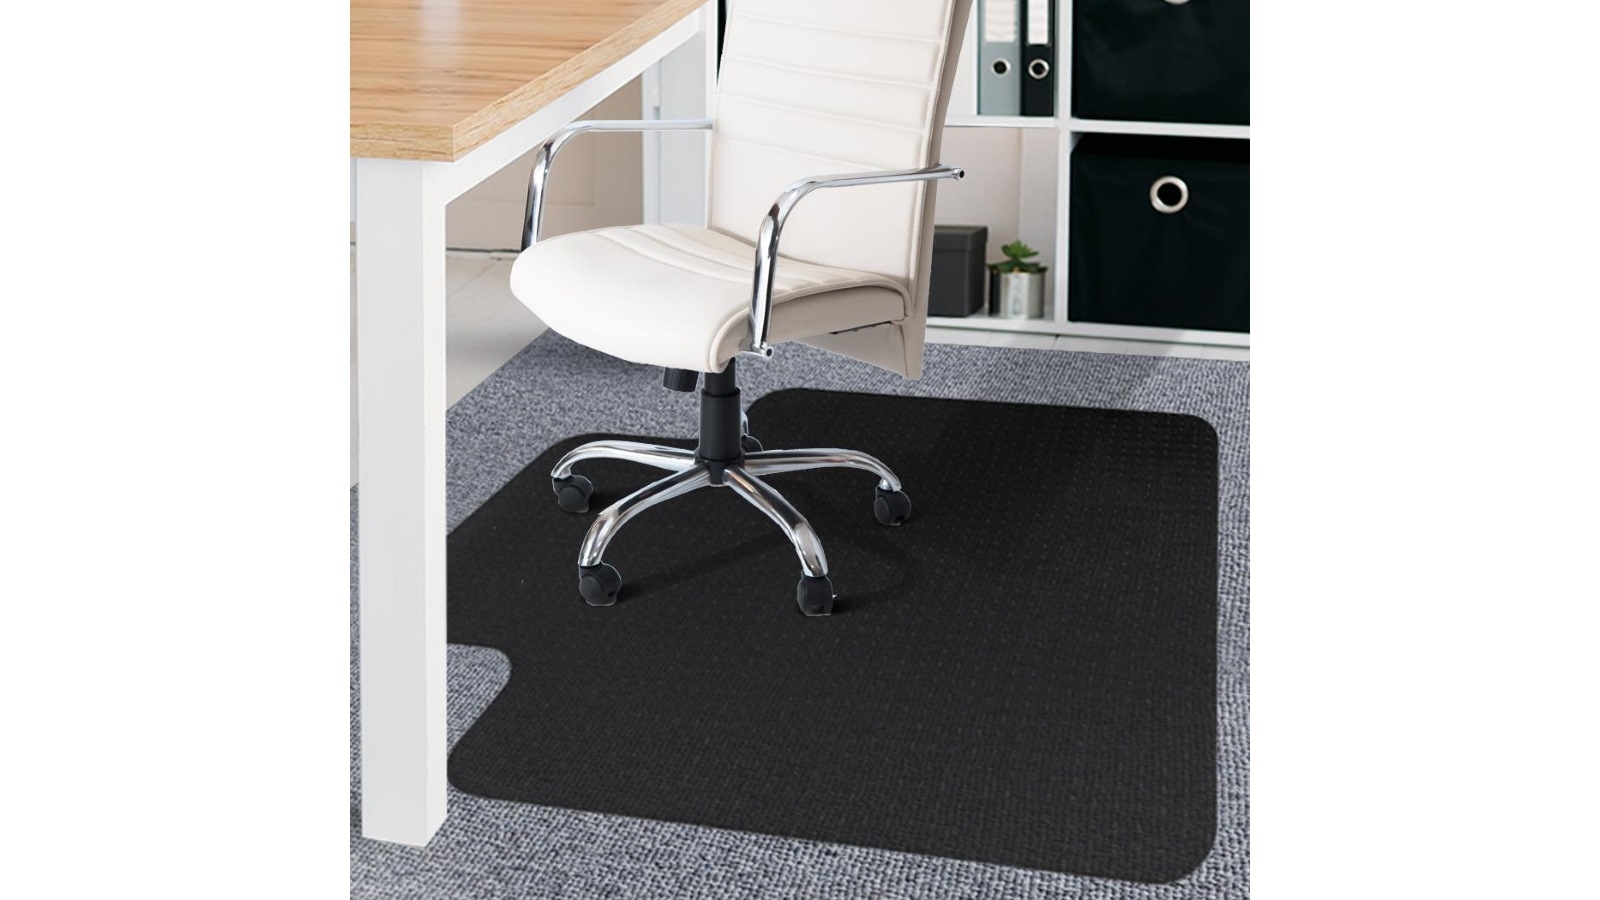 Buy Chair Mat Carpet Hard Floor Protectors Home Office Room Computer Work Pvc Mats Black Harvey Norman Au